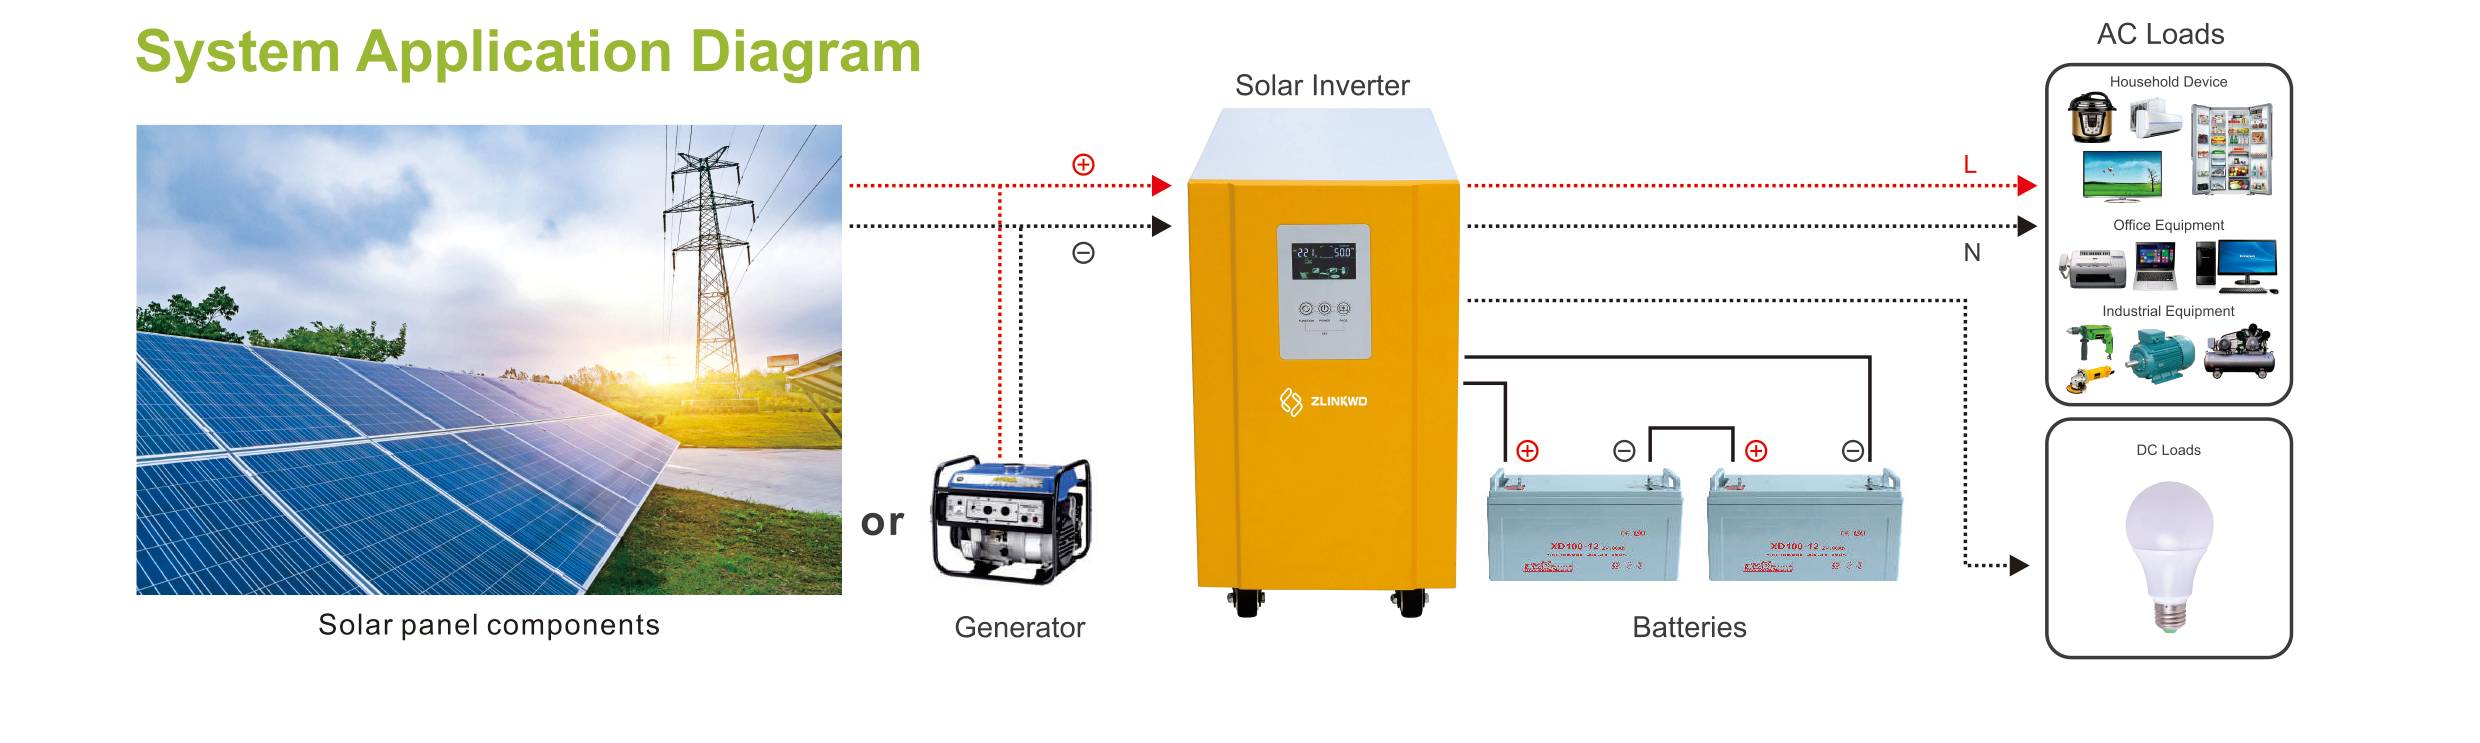 Hybrid Solar Inverter Application Diagram 